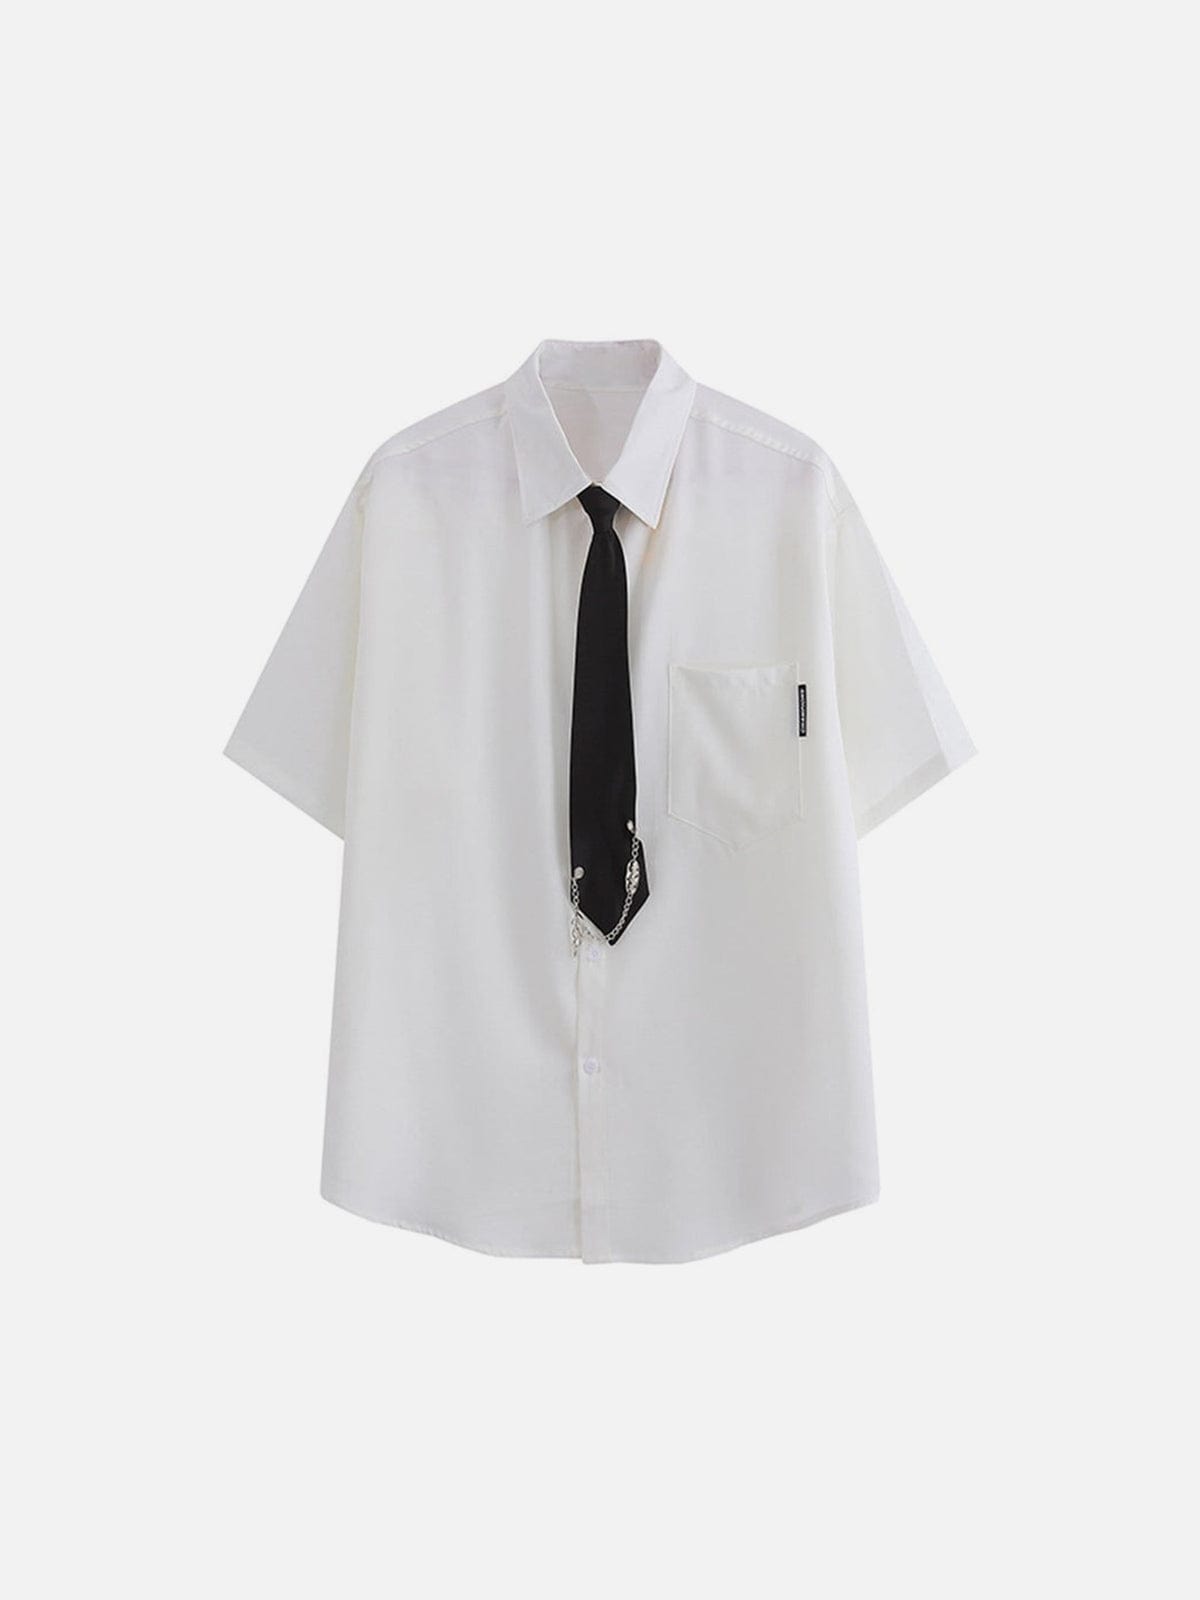 Falme Chain Tie Short Sleeve Shirt Streetwear Brand Techwear Combat Tactical YUGEN THEORY